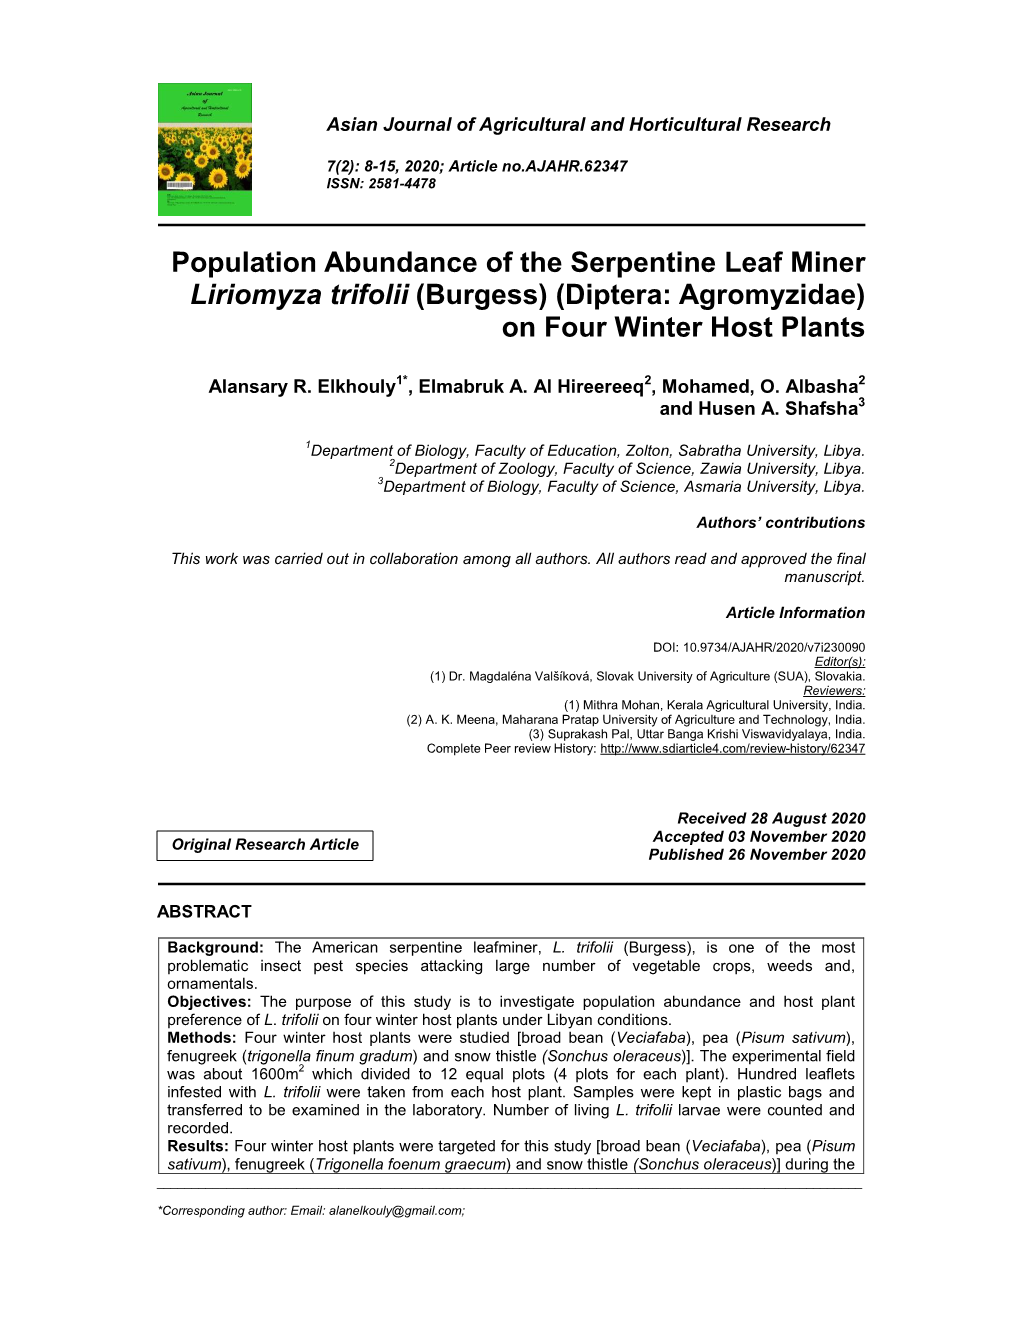 Population Abundance of the Serpentine Leaf Miner Liriomyza Trifolii (Burgess) (Diptera: Agromyzidae) on Four Winter Host Plants